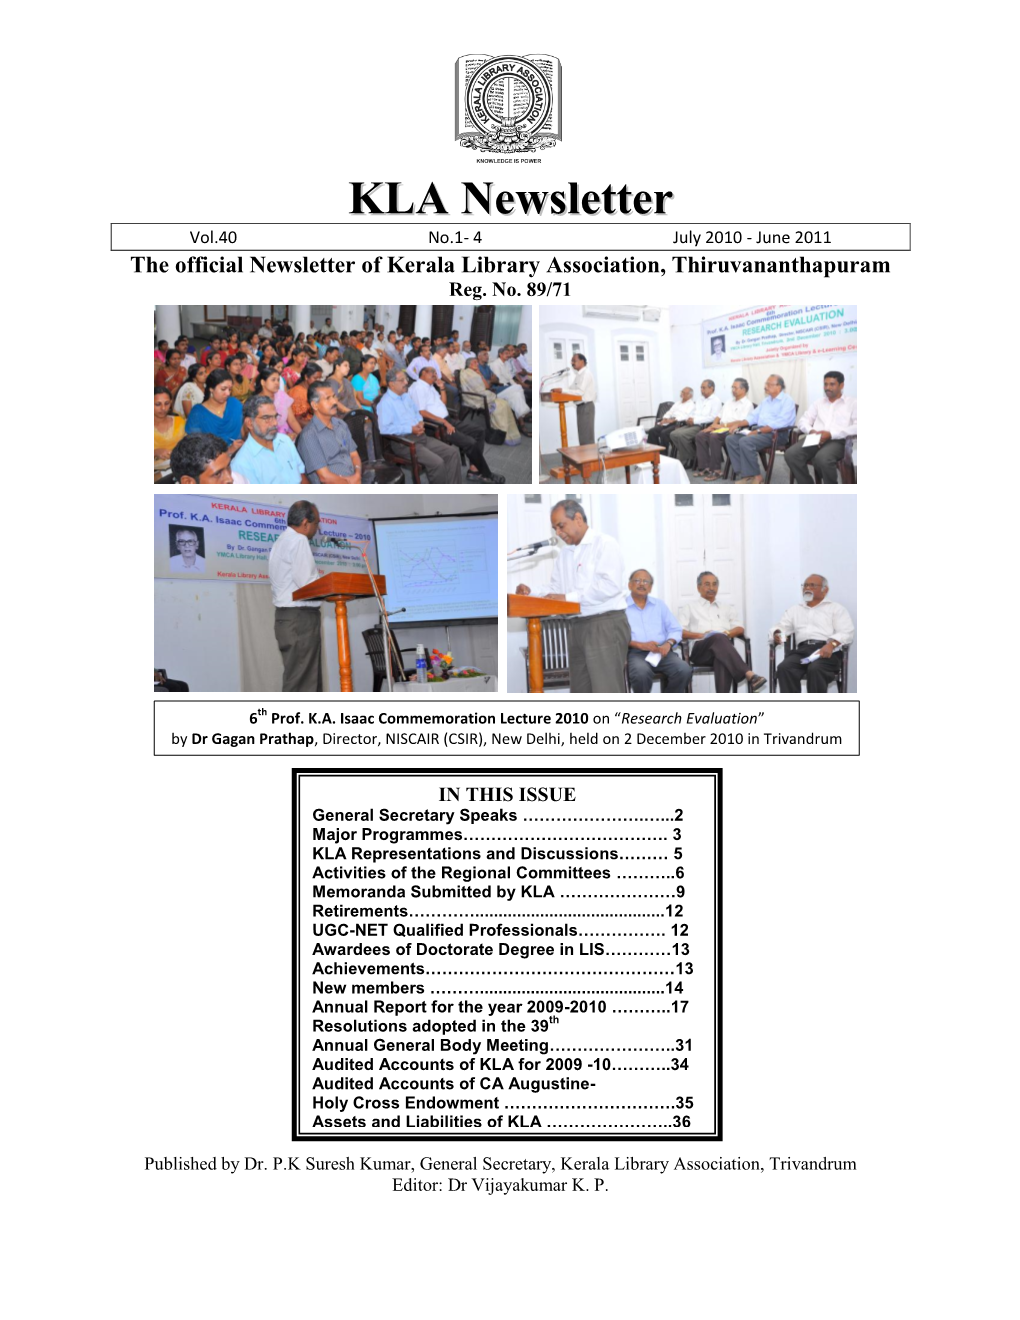 KLA Newsletter Vol